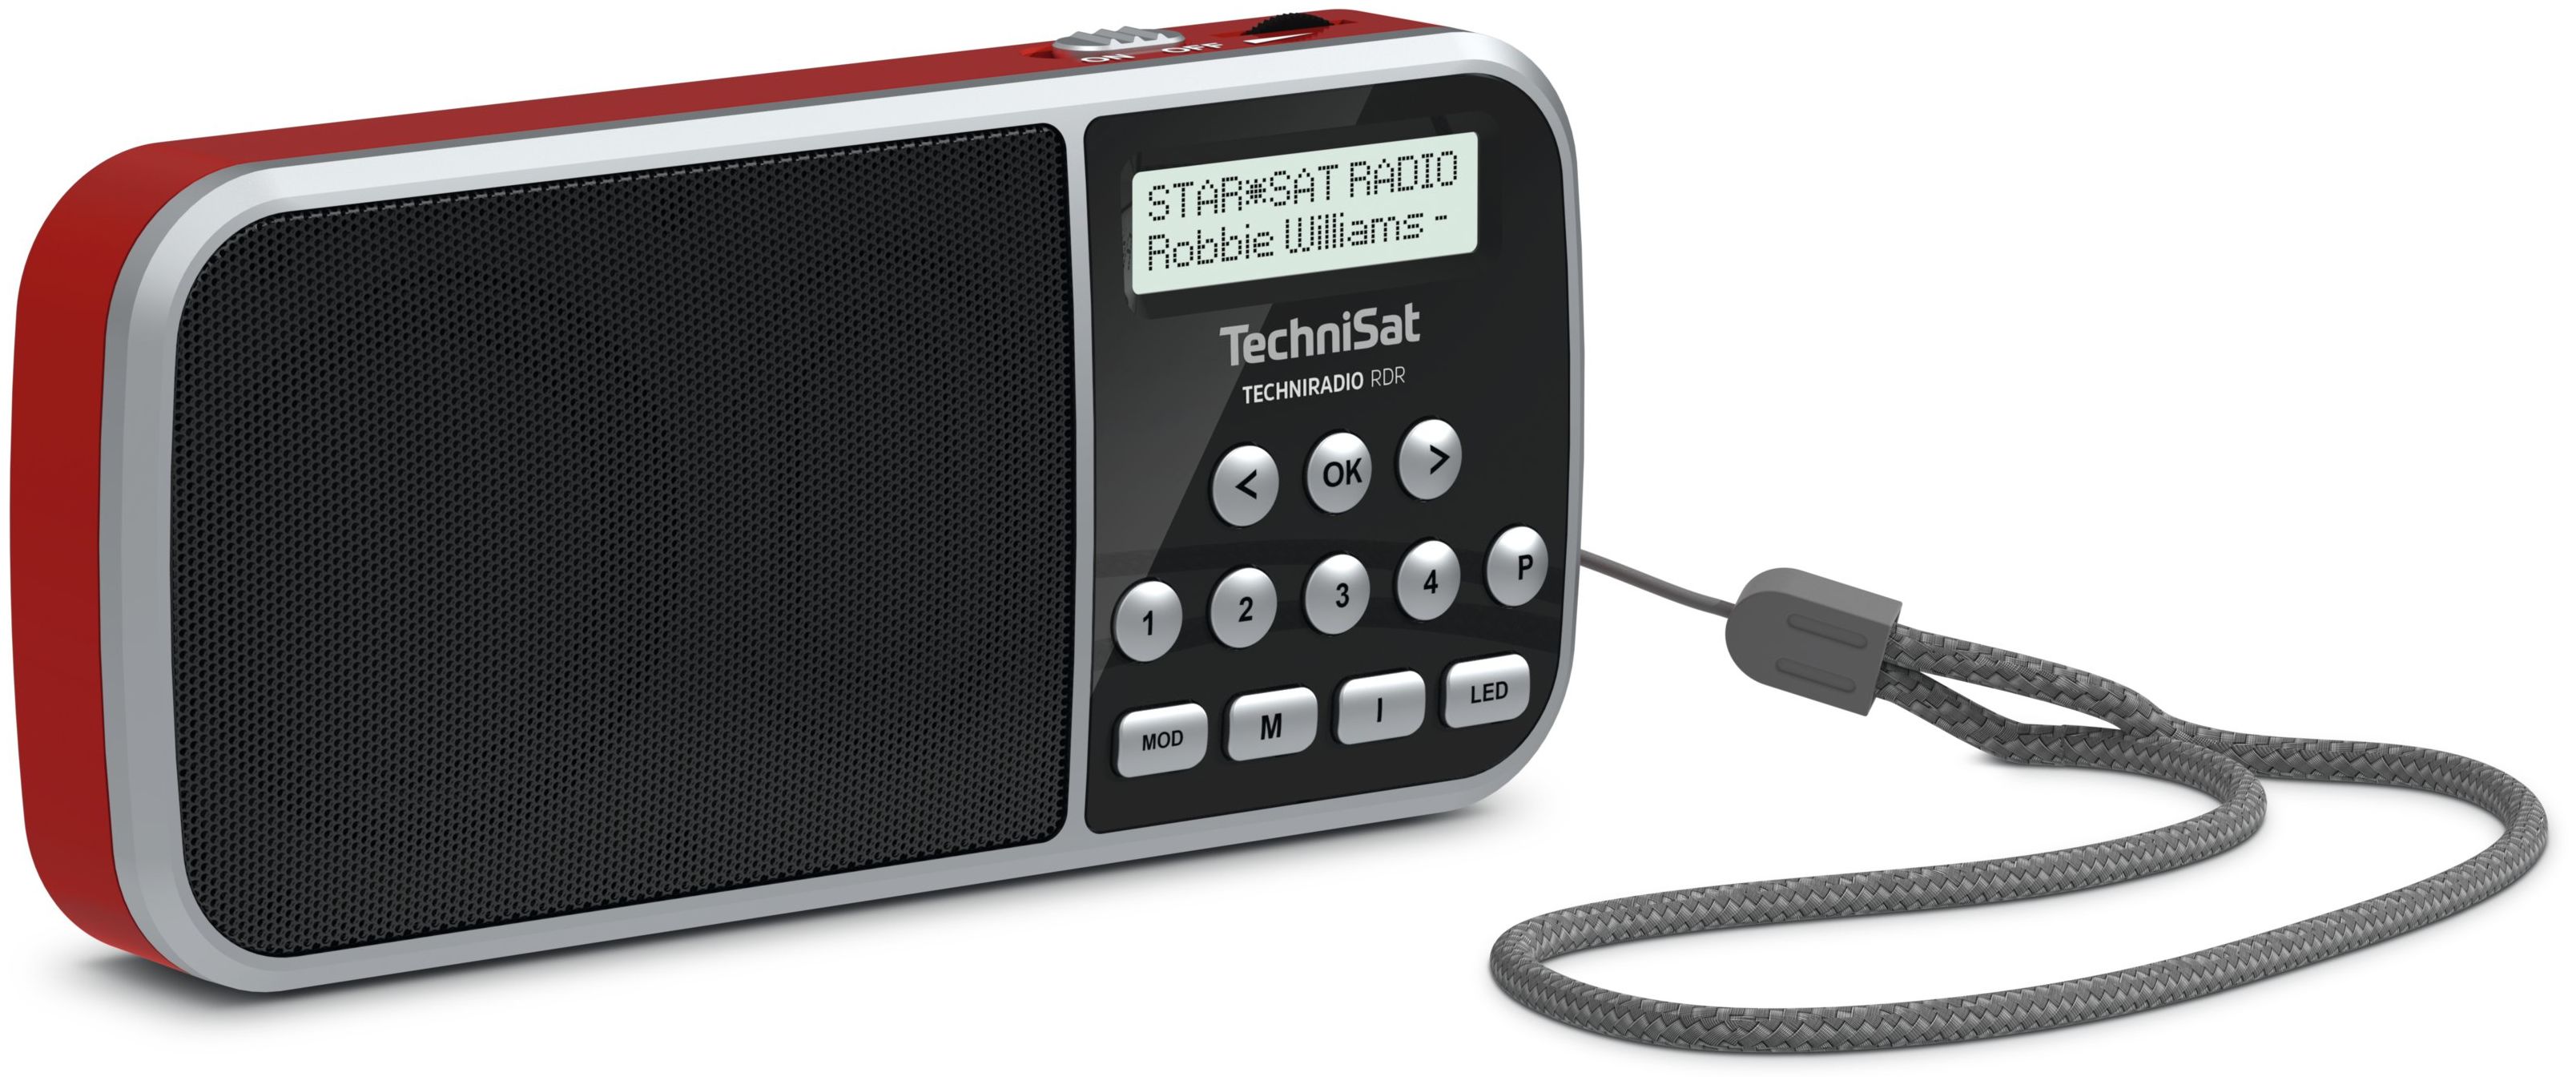 FM RDR DAB+, Technomarkt expert TechniSat (Rot) TechniRadio von Radio Tragbar